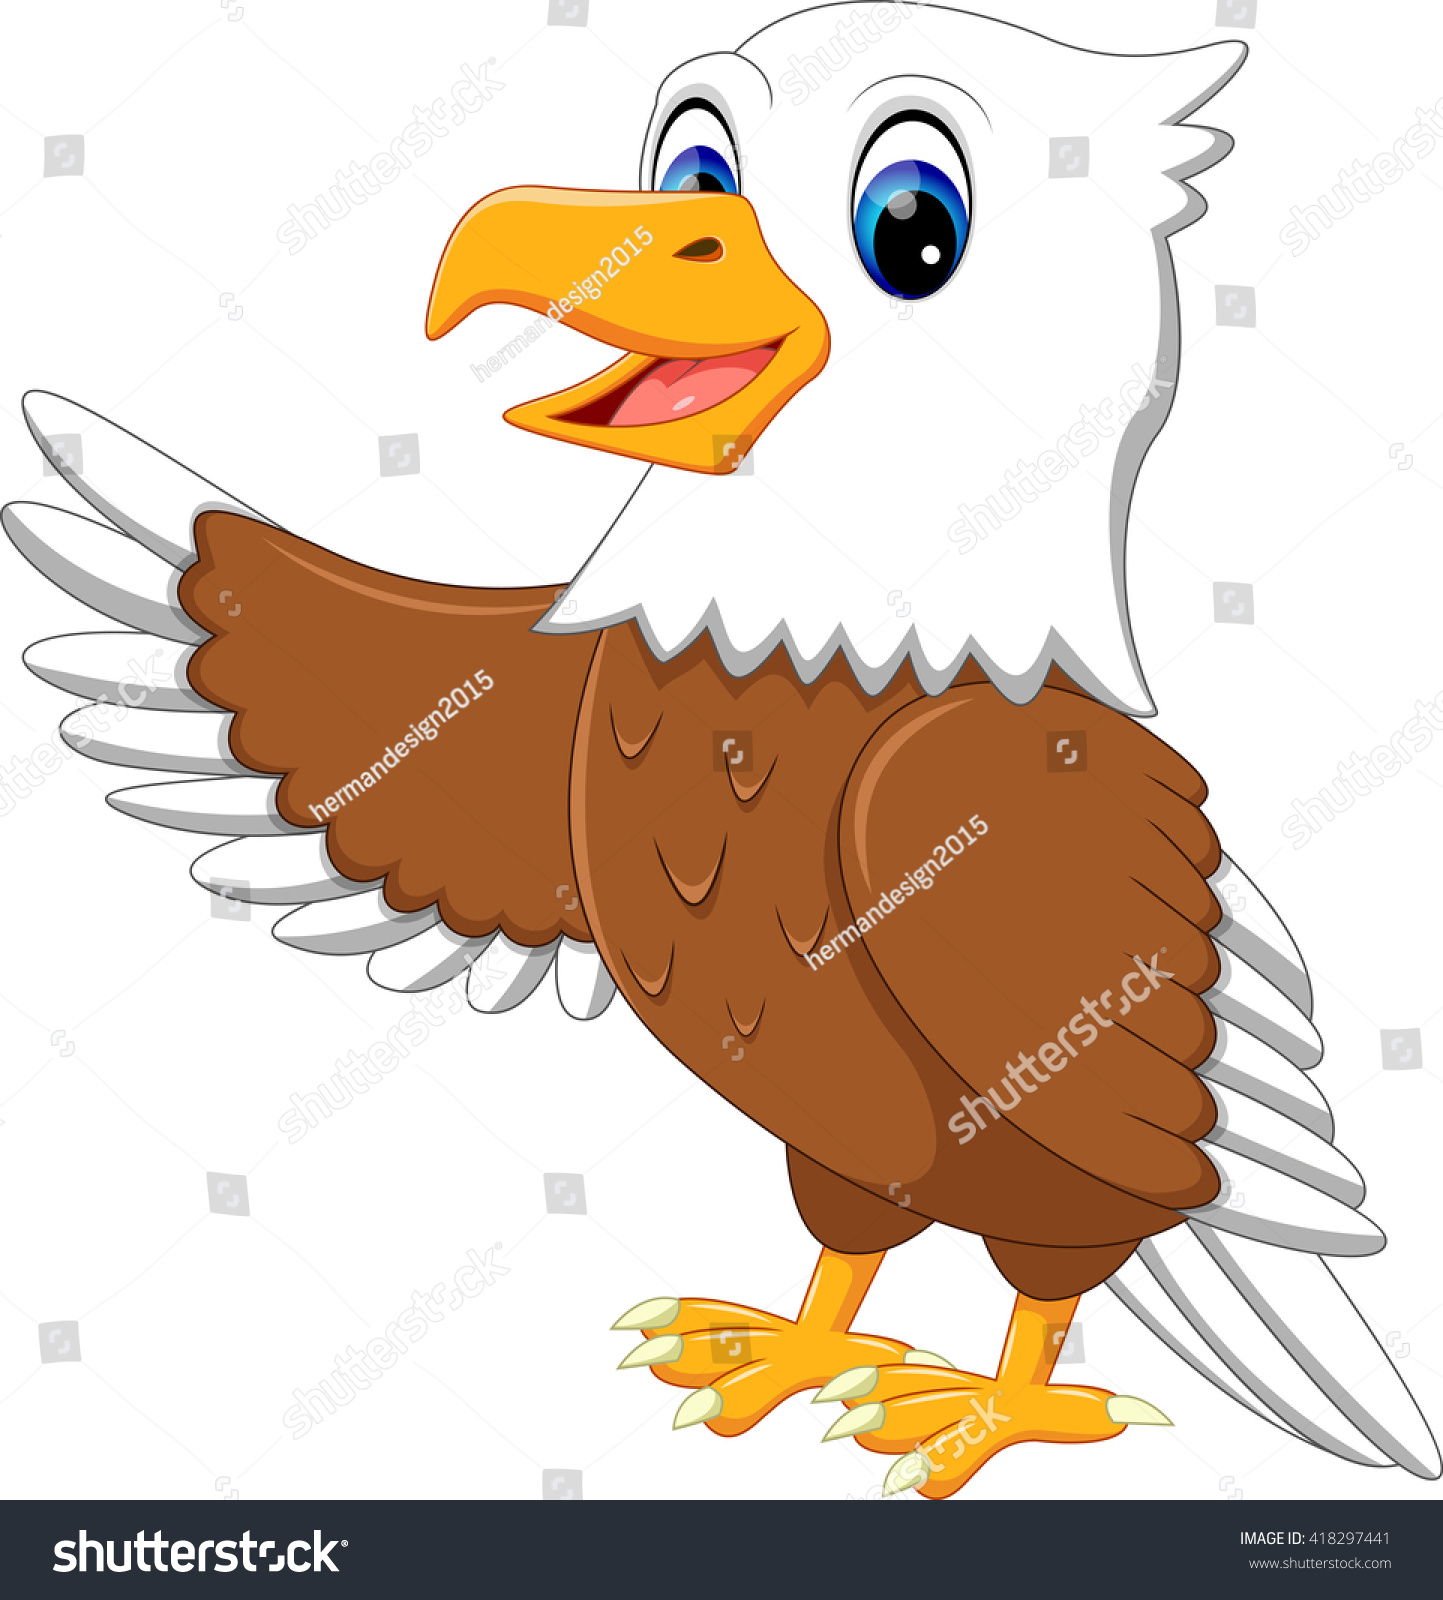 Illustration Of Cute Eagle Cartoon - 418297441 : Shutterstock